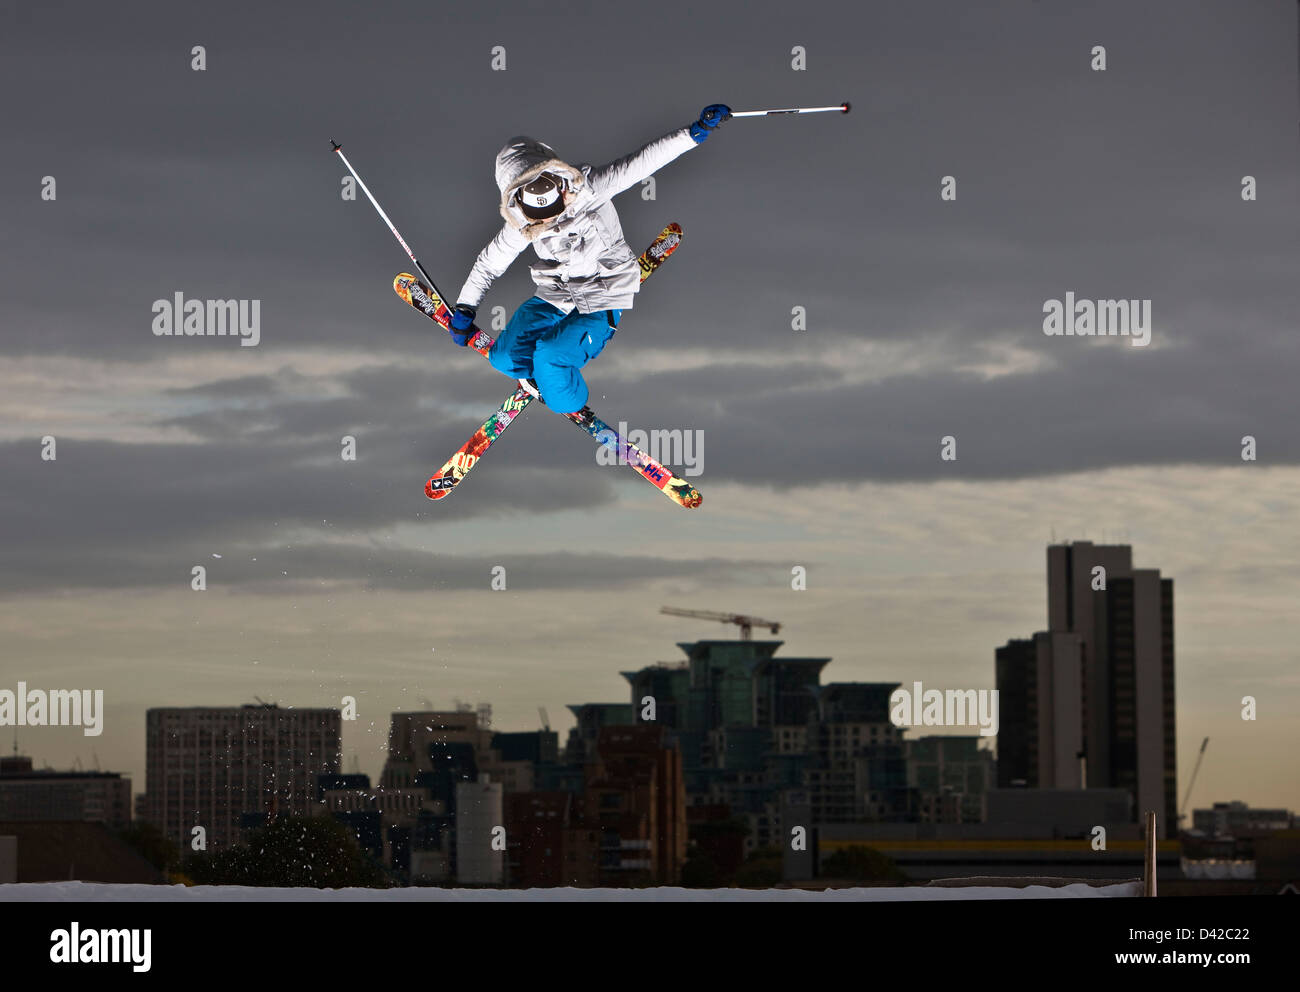 Ski urbain milieu air action jump, skis franchi Banque D'Images